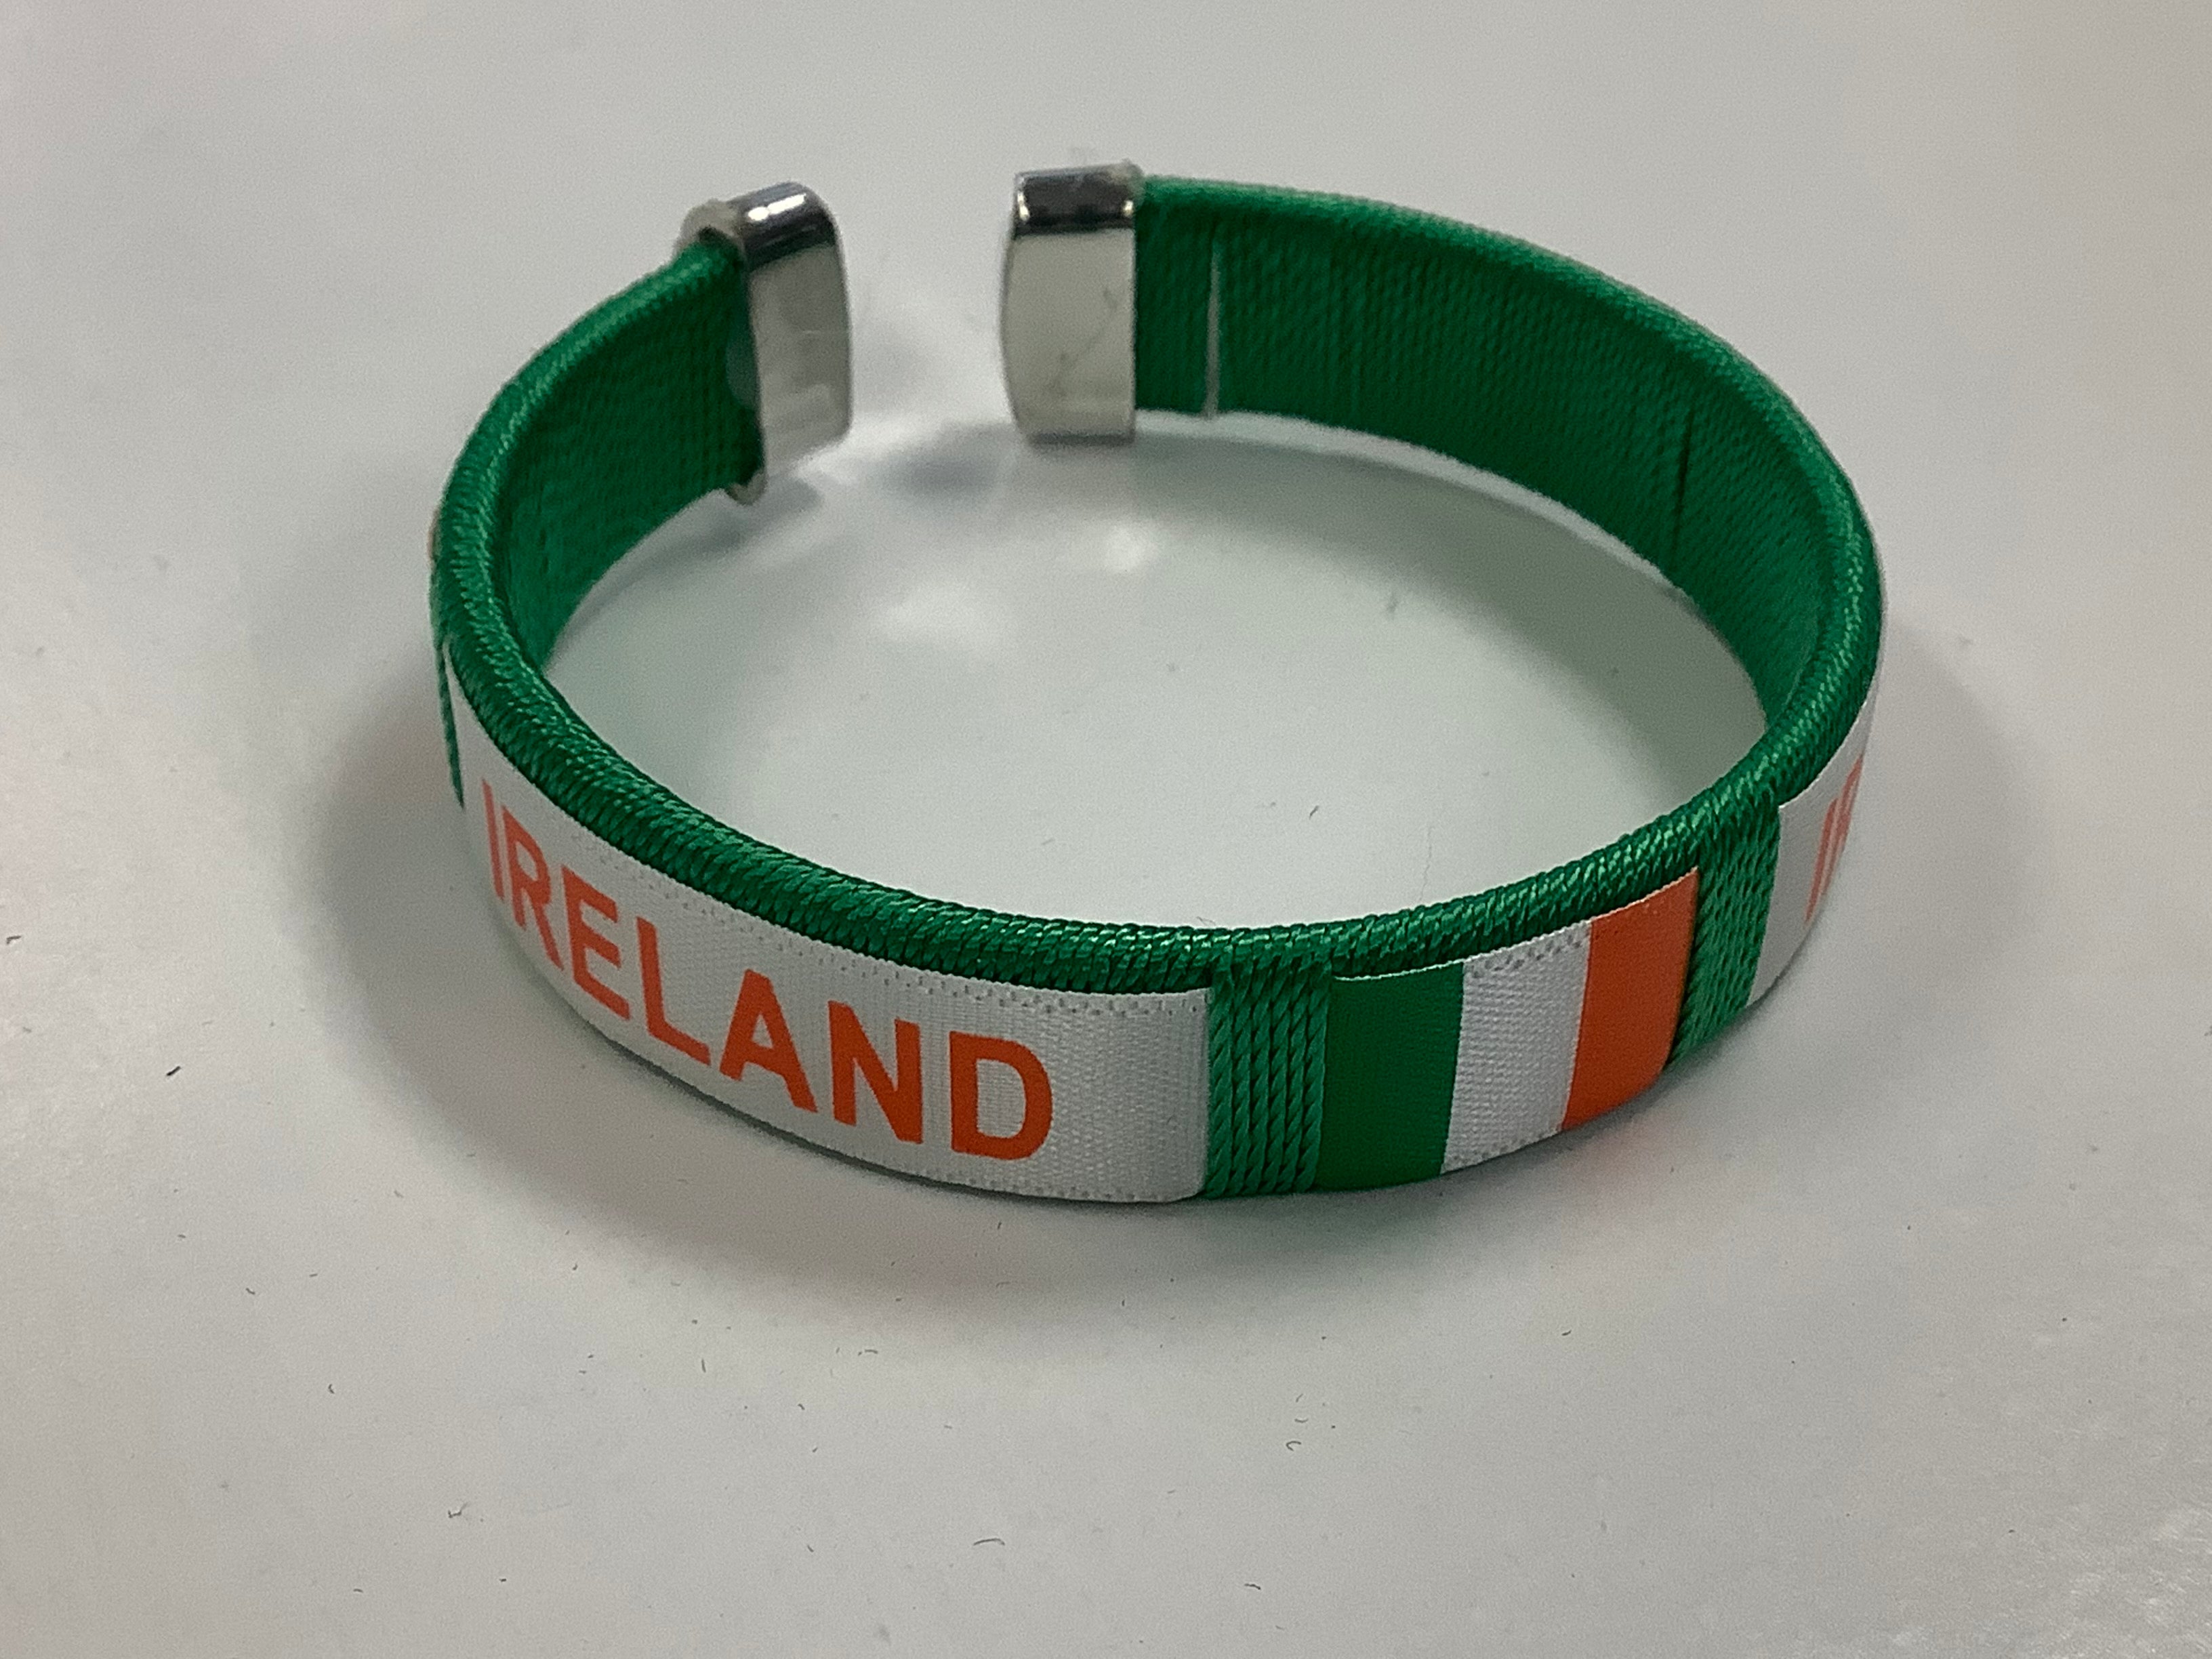 Ireland bracelet